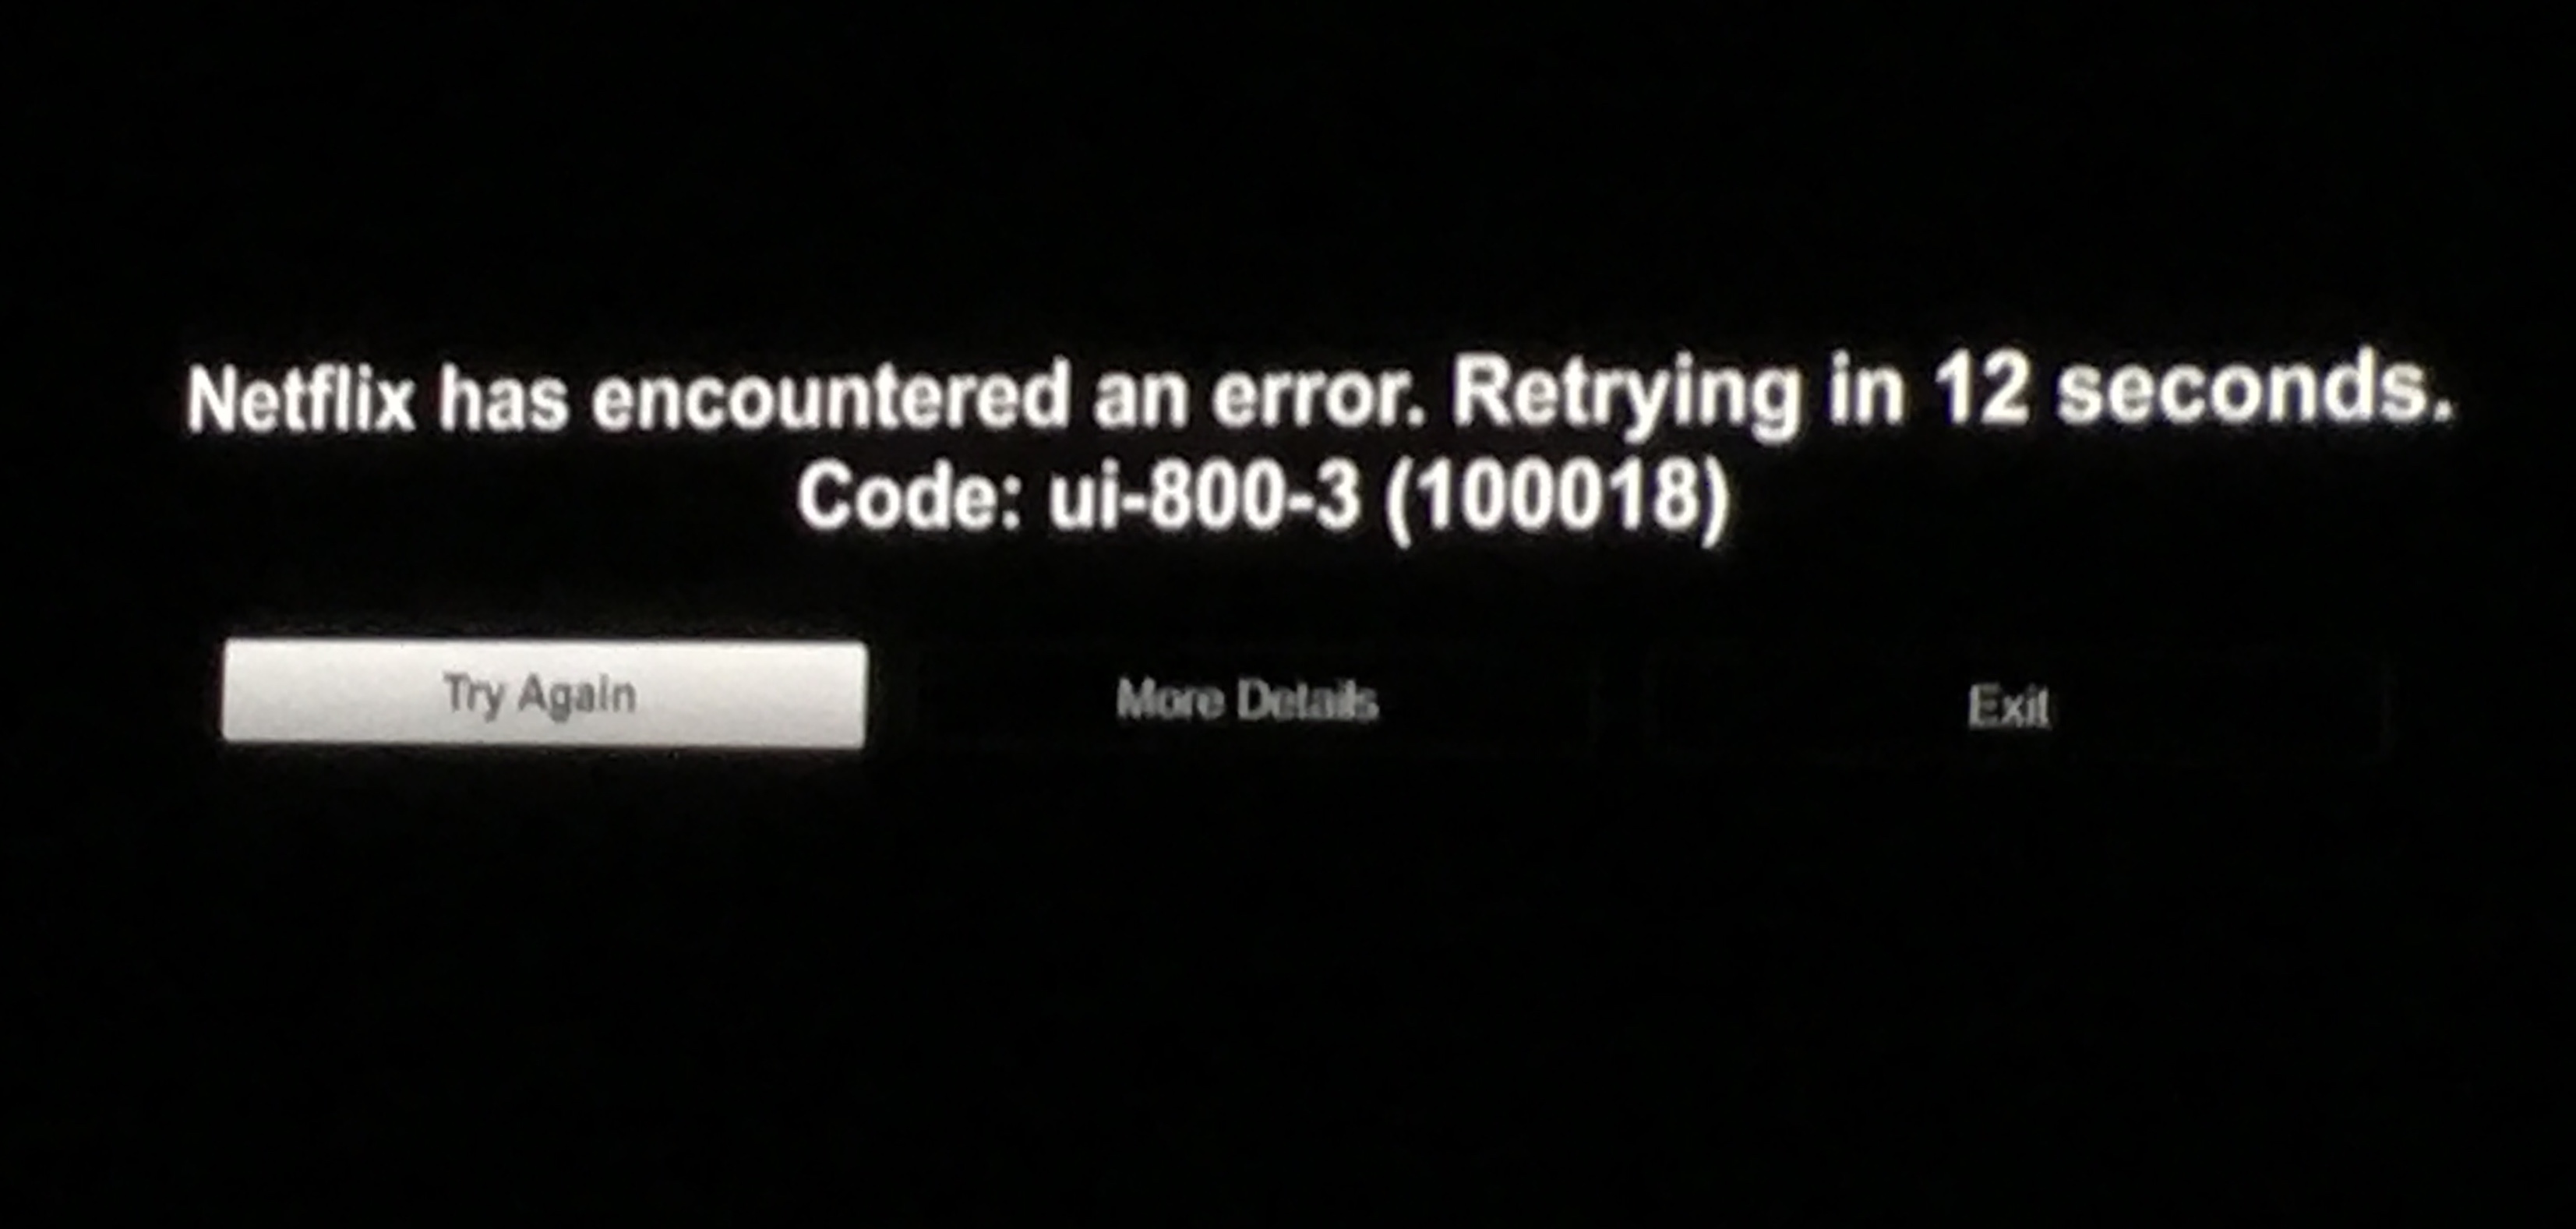 Netflix Error Code UI-800-3